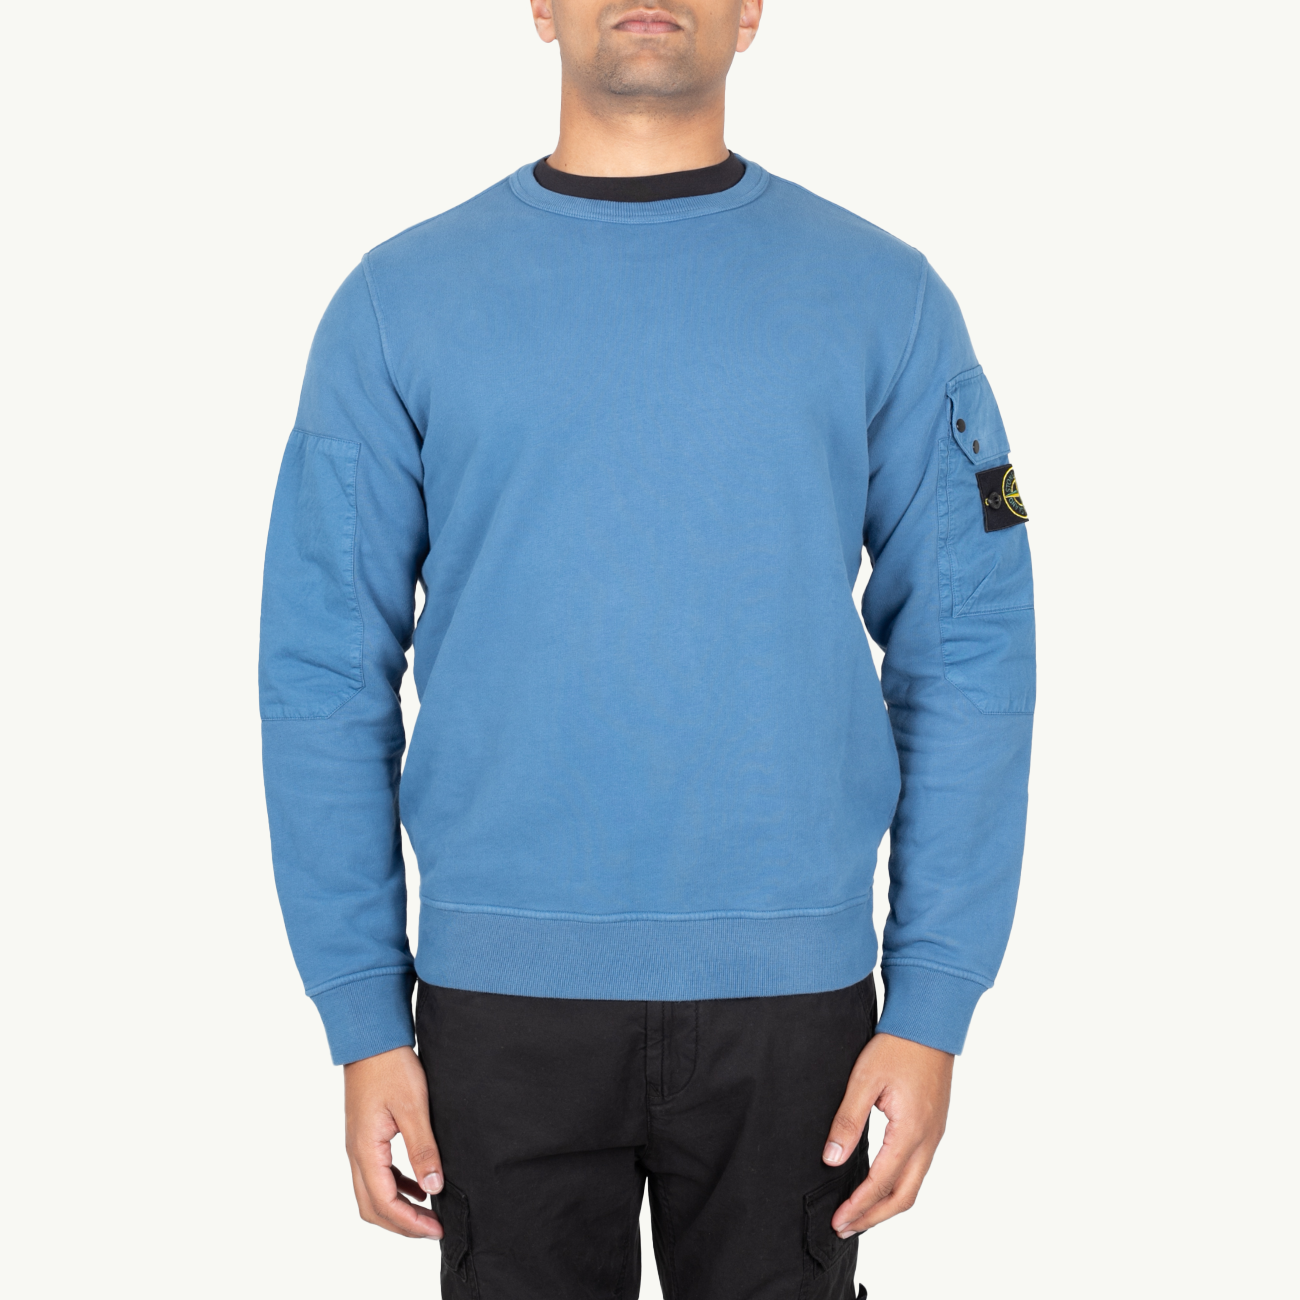 Sweatshirt Crew Patch Sleeve Pocket - Dark Blue 2481